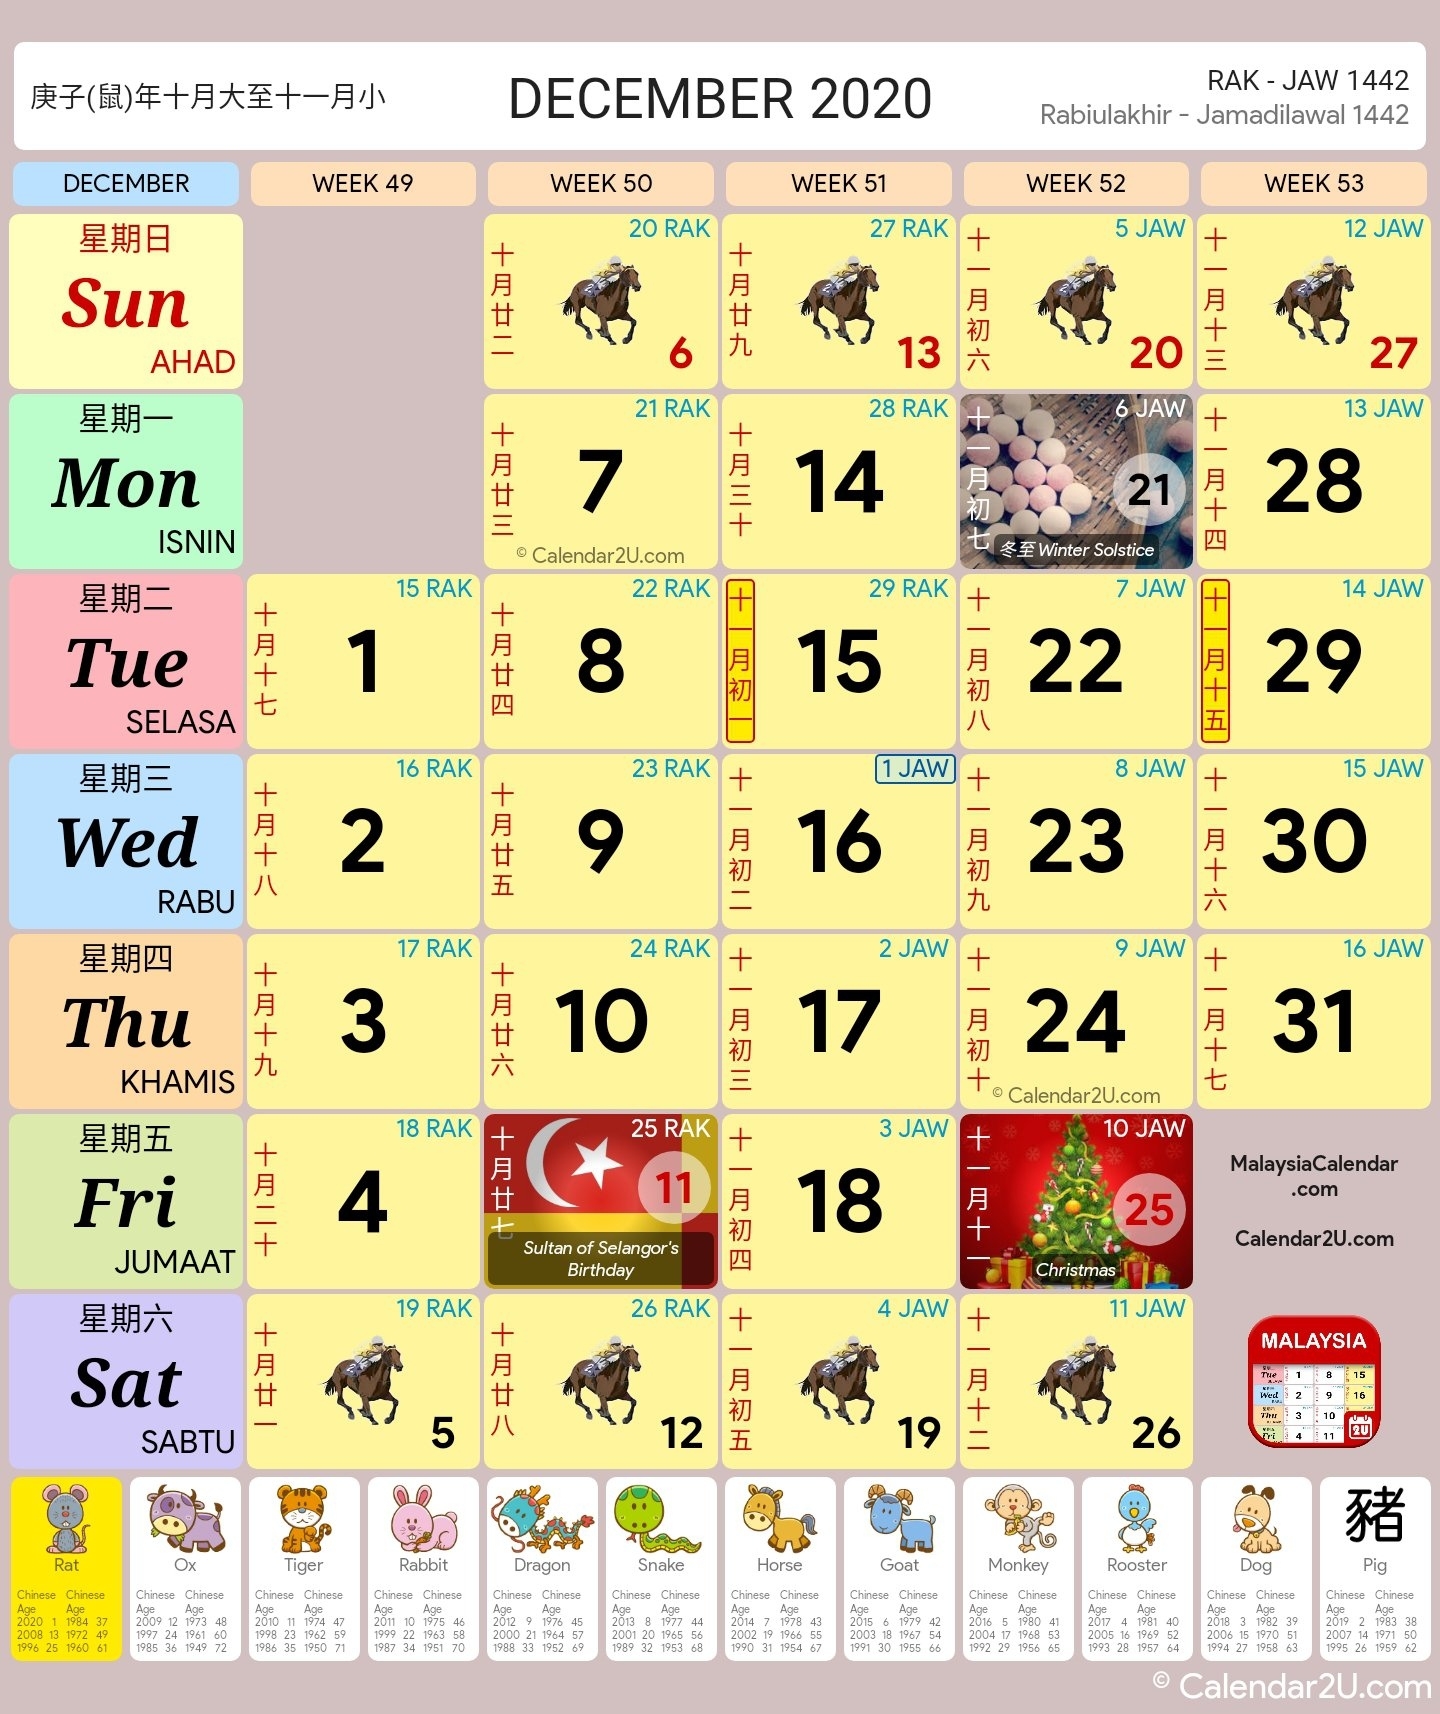 Malaysia Calendar Year 2020 (School Holiday) - Malaysia Calendar Dashing 2020 Calendar With Malaysia Holidays And School Holiday